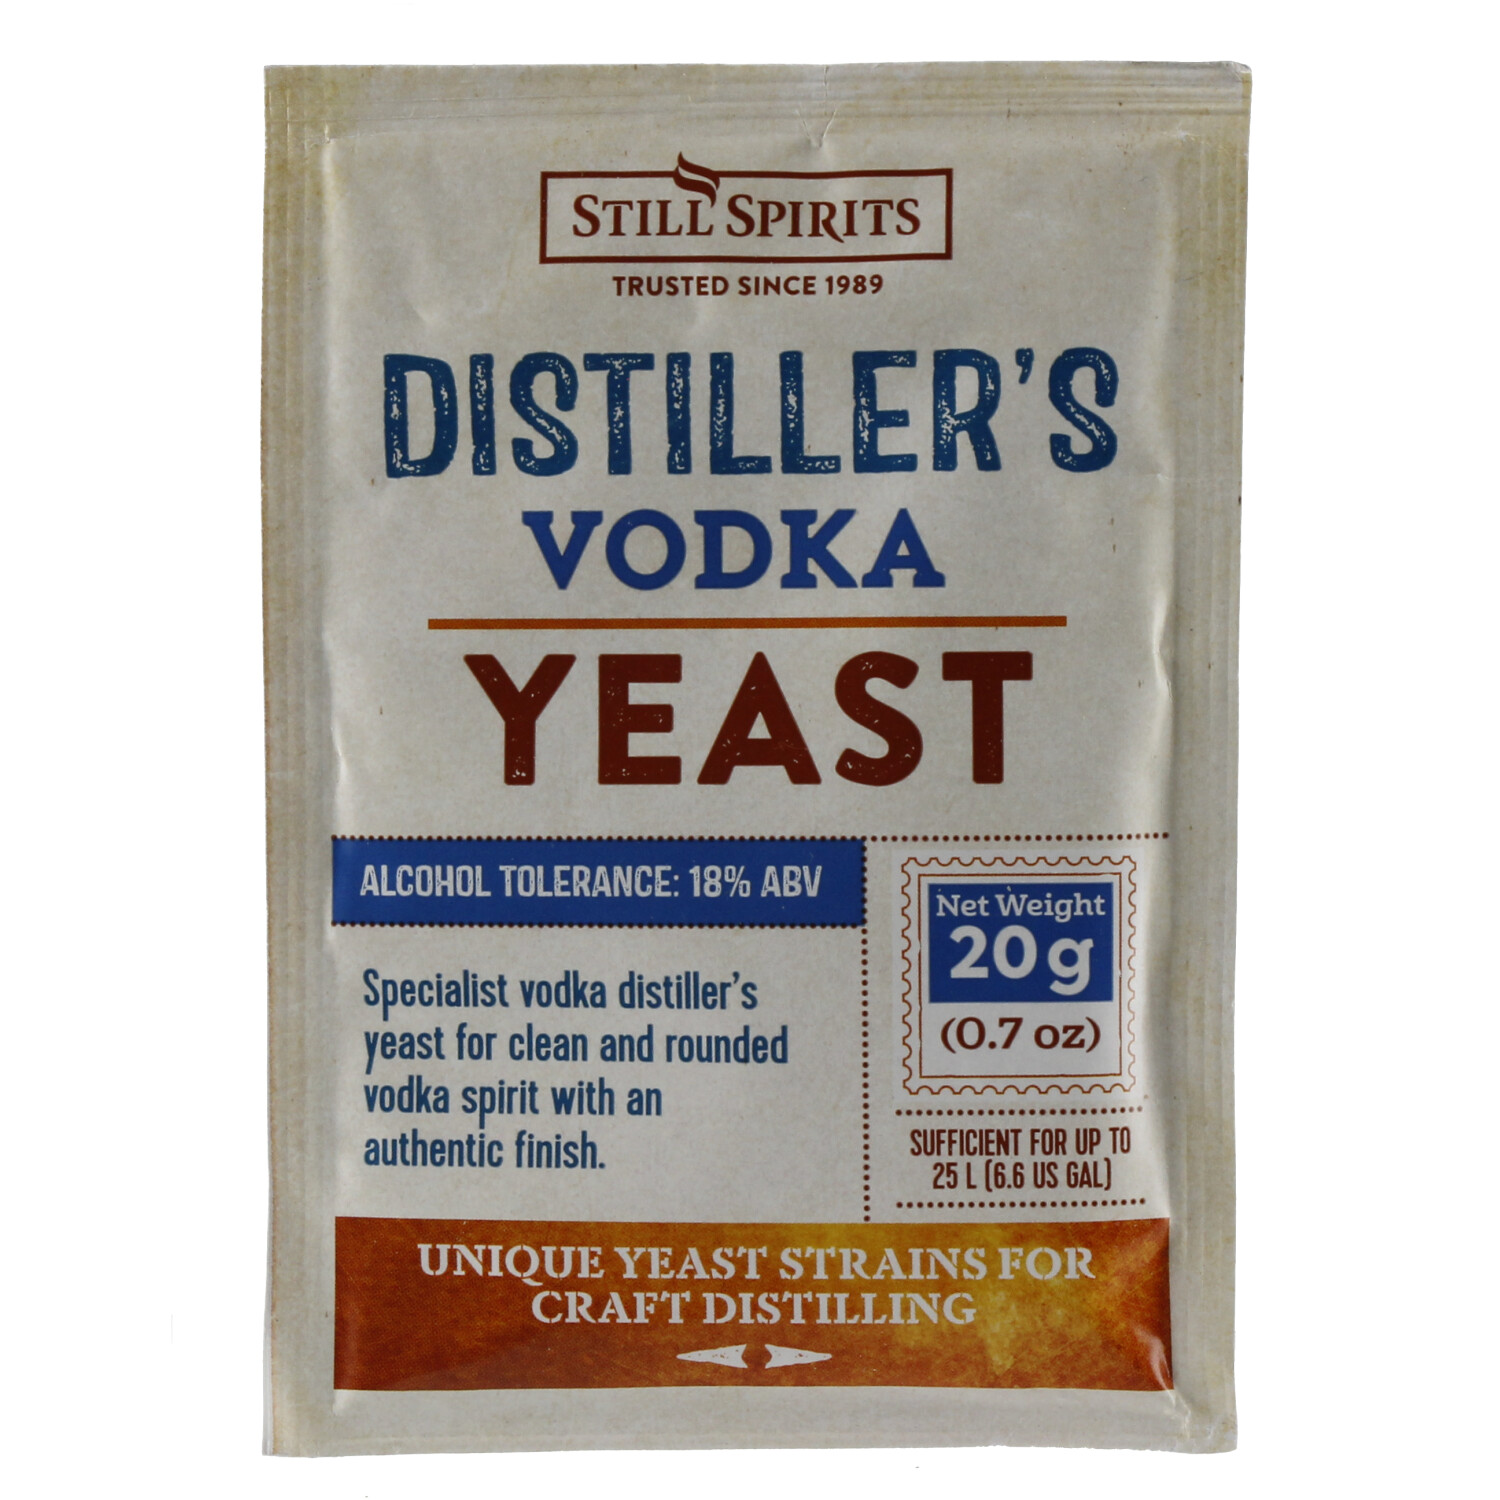 Still Spirits Distiller's Yeast Vodka 20 g